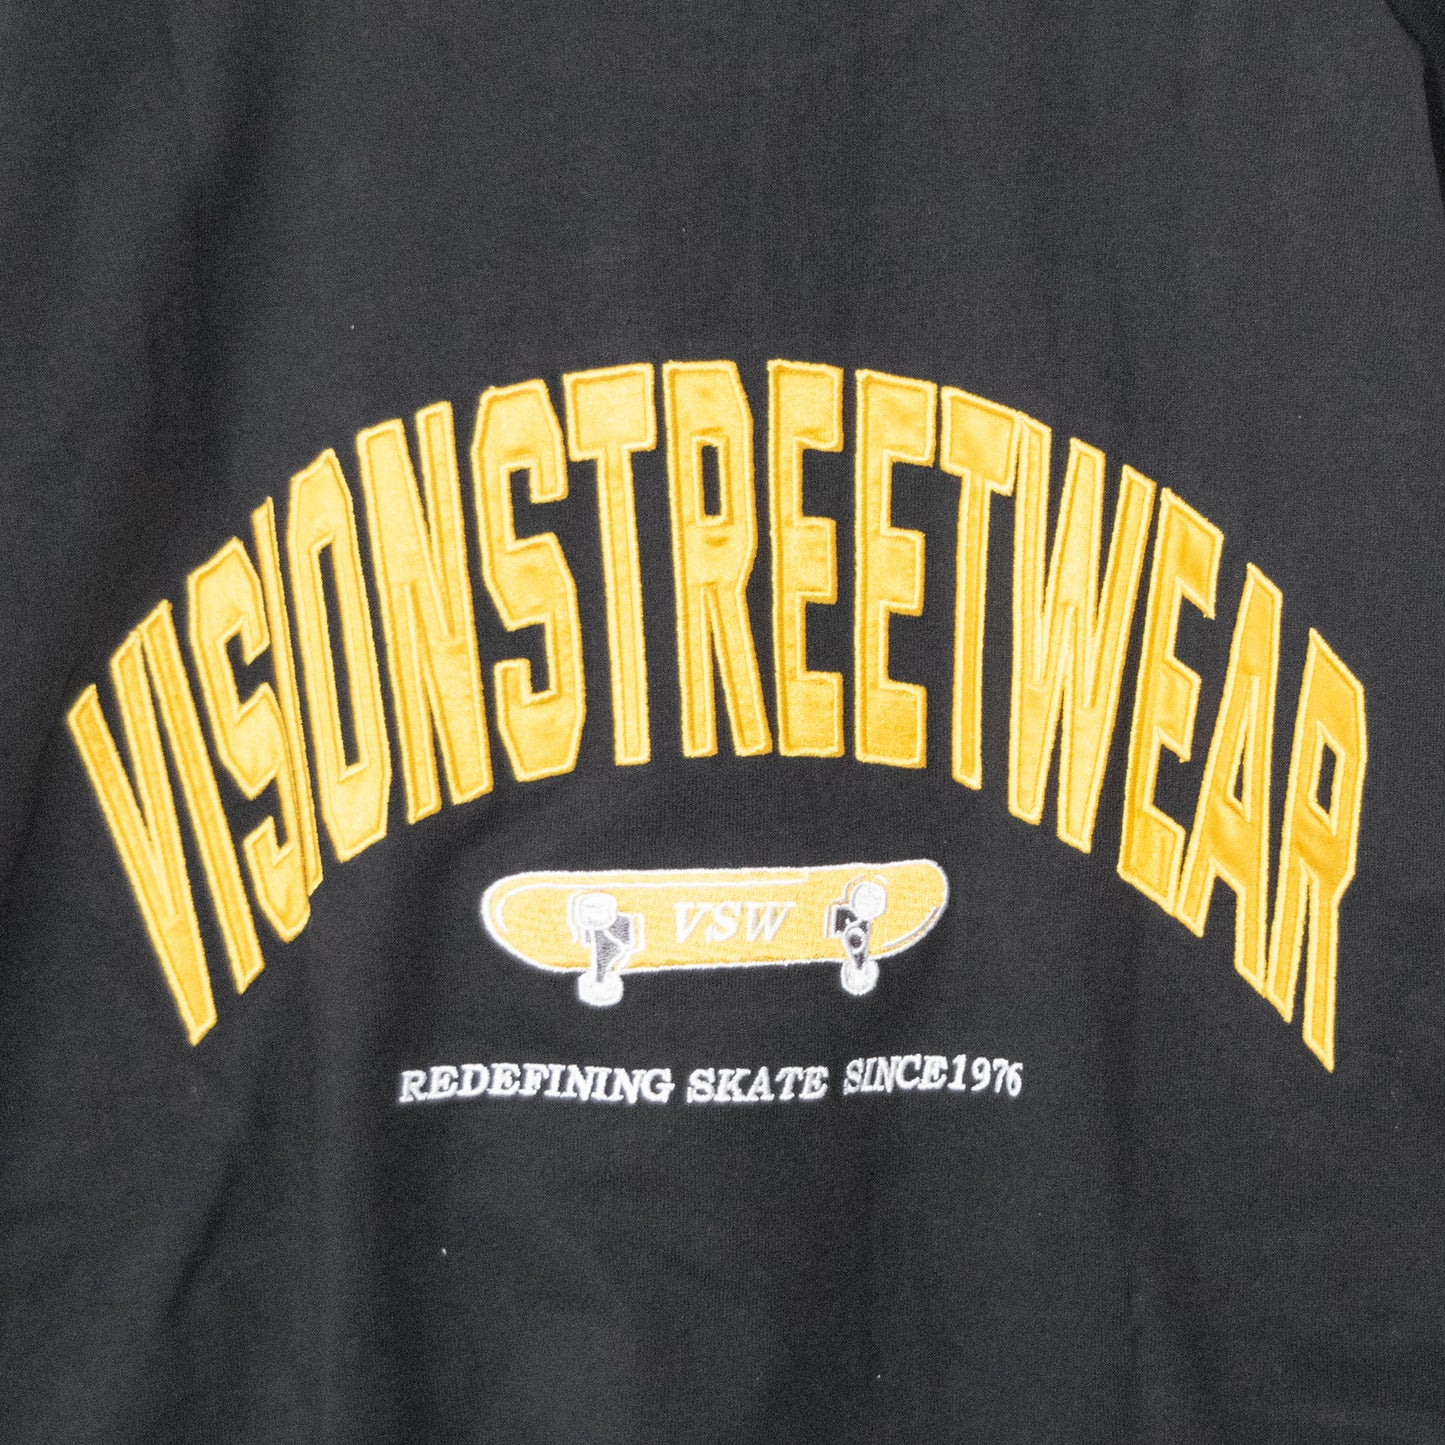 VISION STREET WEAR サテンワッペン 半袖Tシャツ BLACK